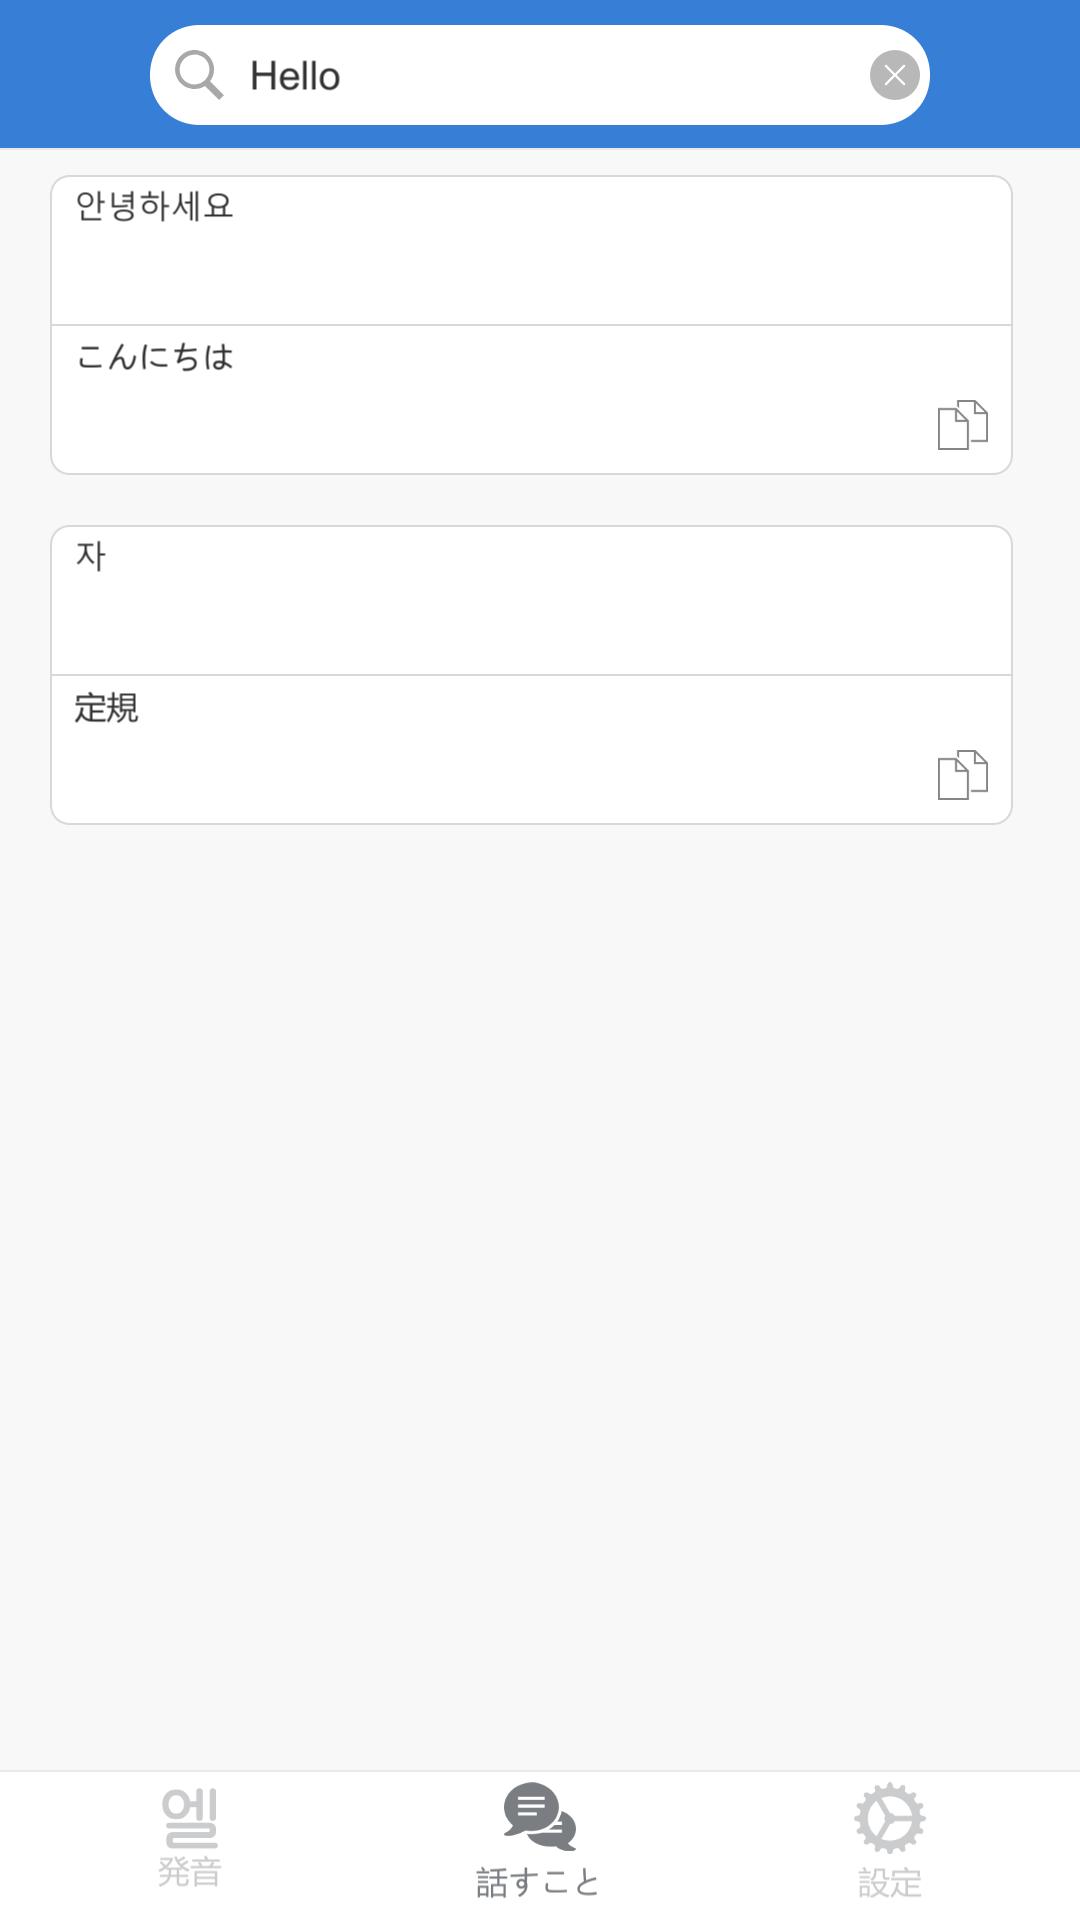 Android 用の 韓国語アルファベット発音表 Pro 韓国語会話短い文章とレタリングの発音 韓国語翻訳 韓国語学習 Apk をダウンロード